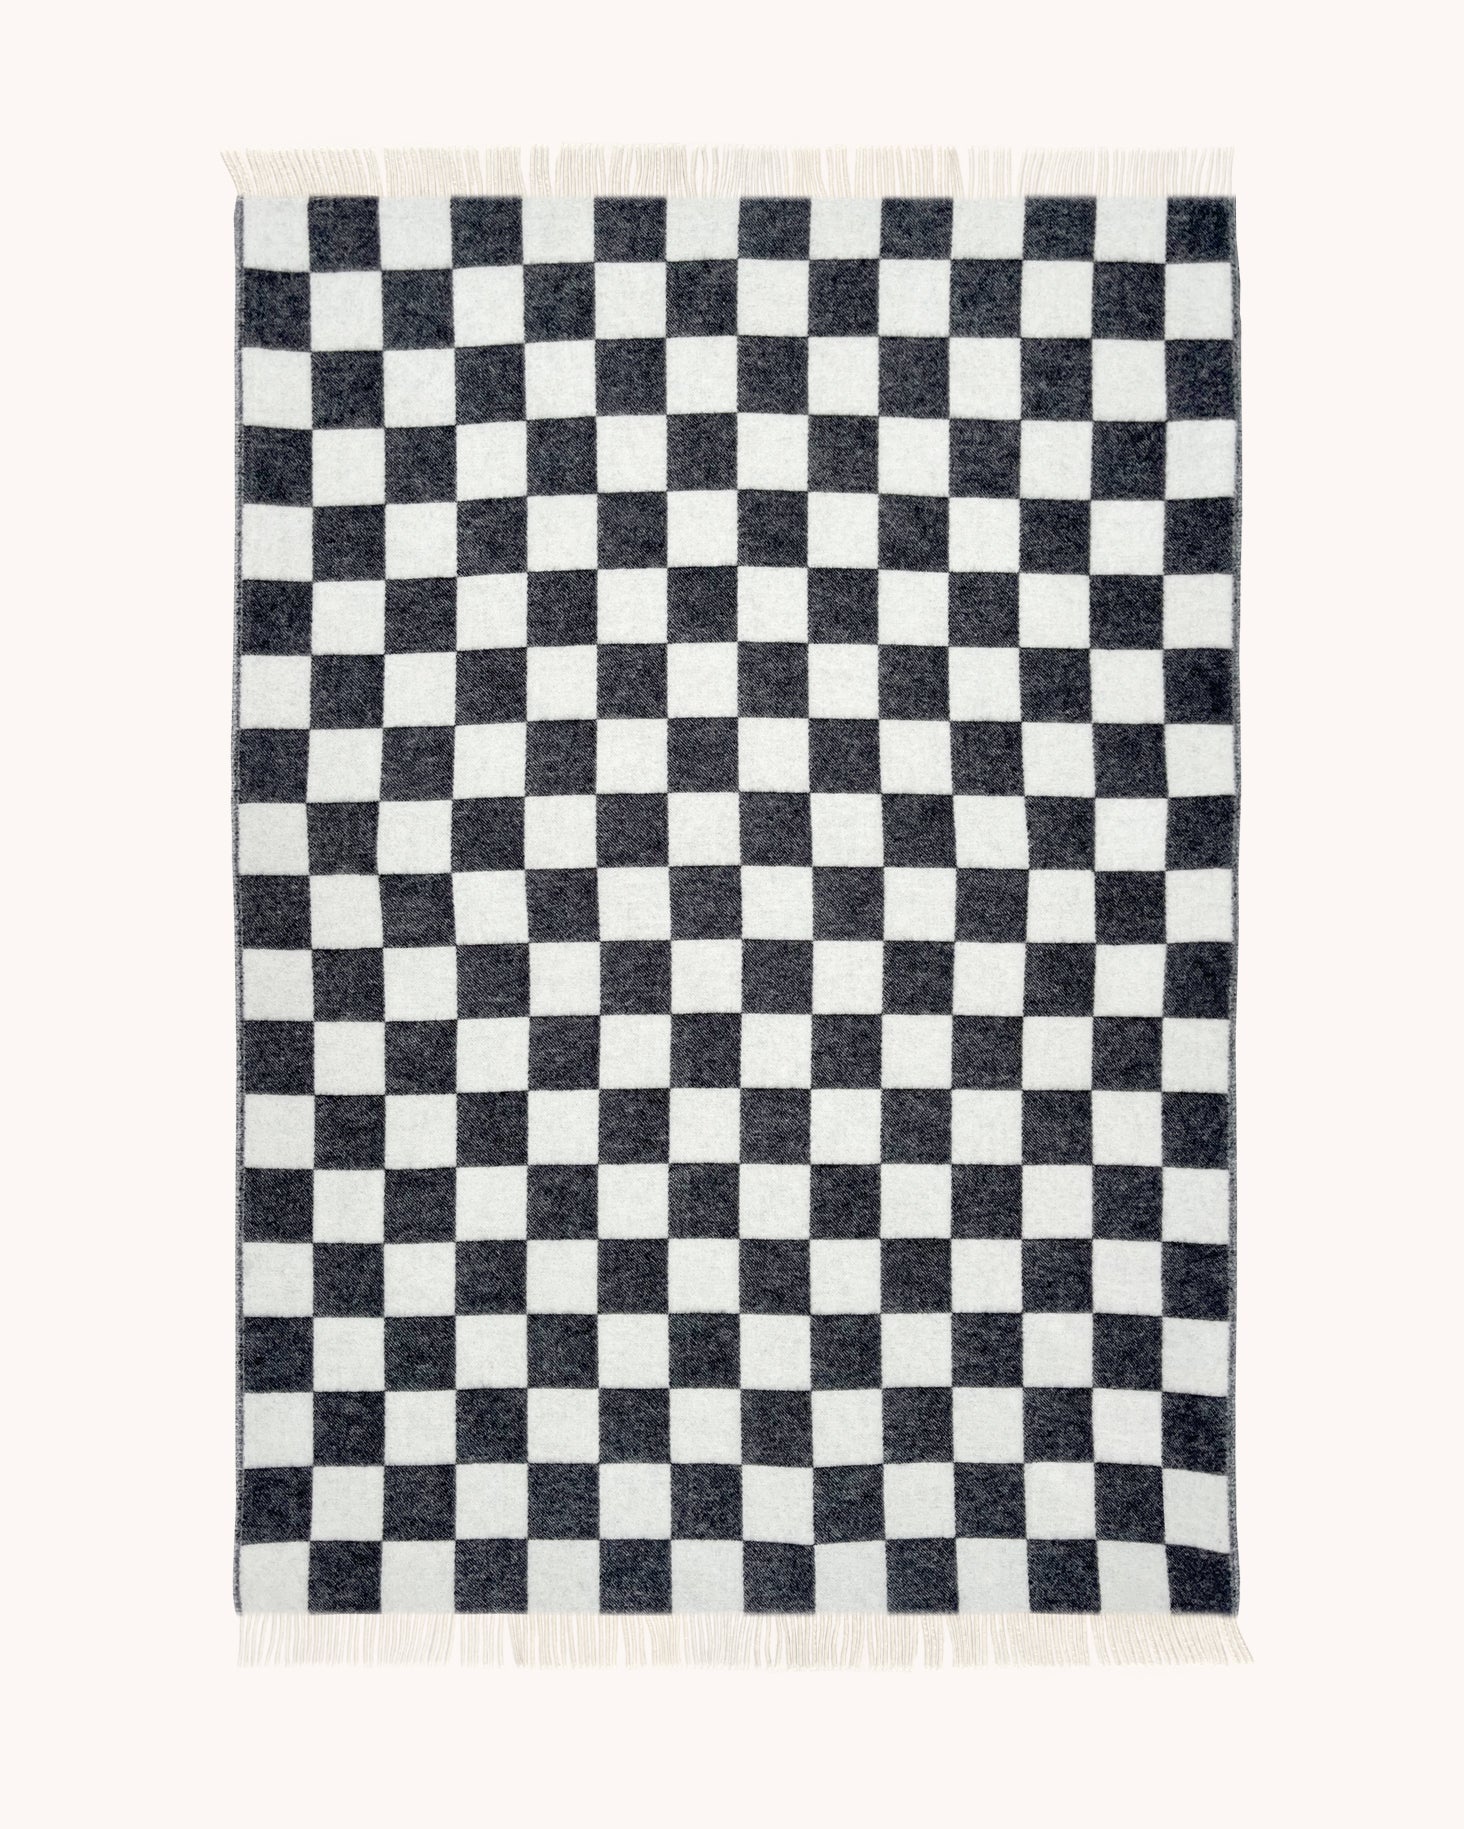 Checkerboard Throw Black White Wool